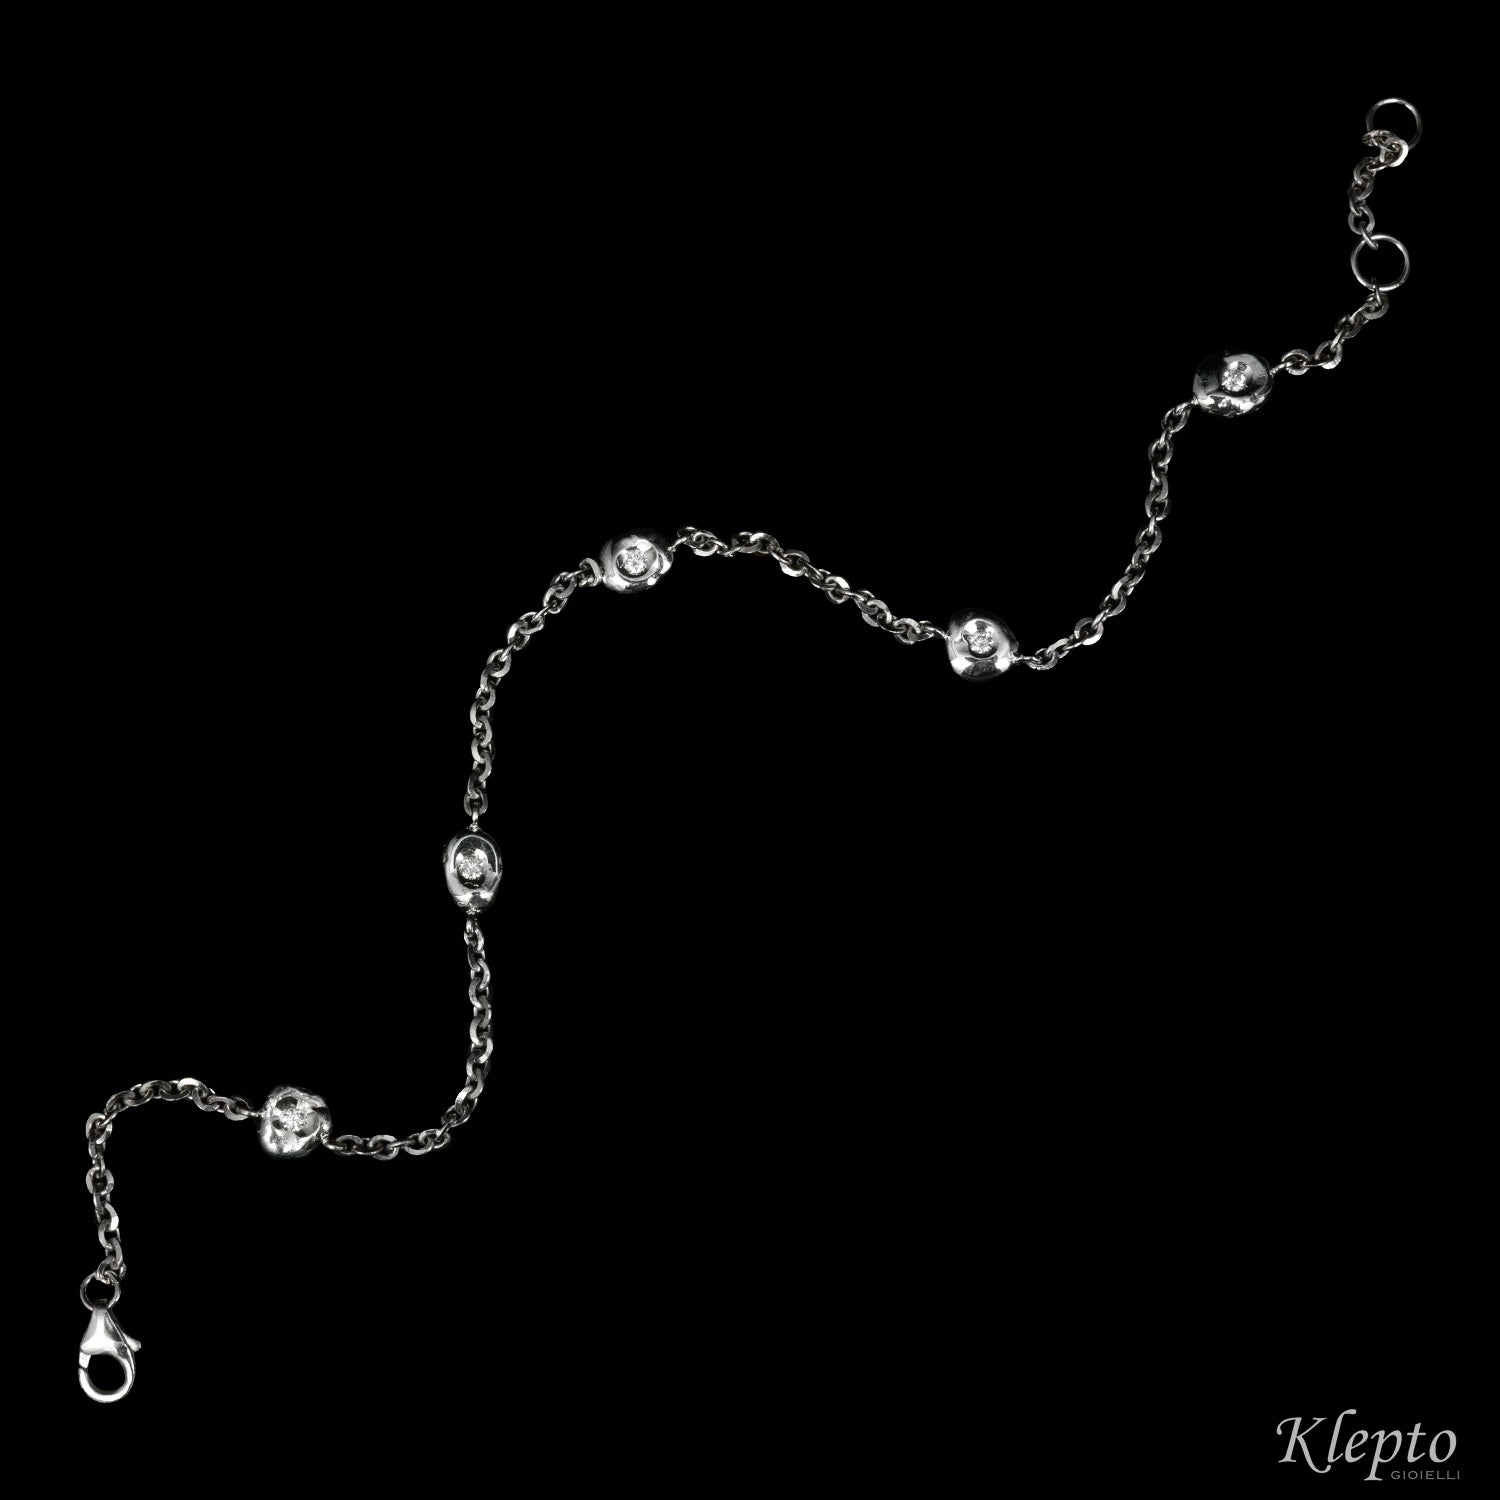 White Gold Bracelet with Diamonds "Pepita"